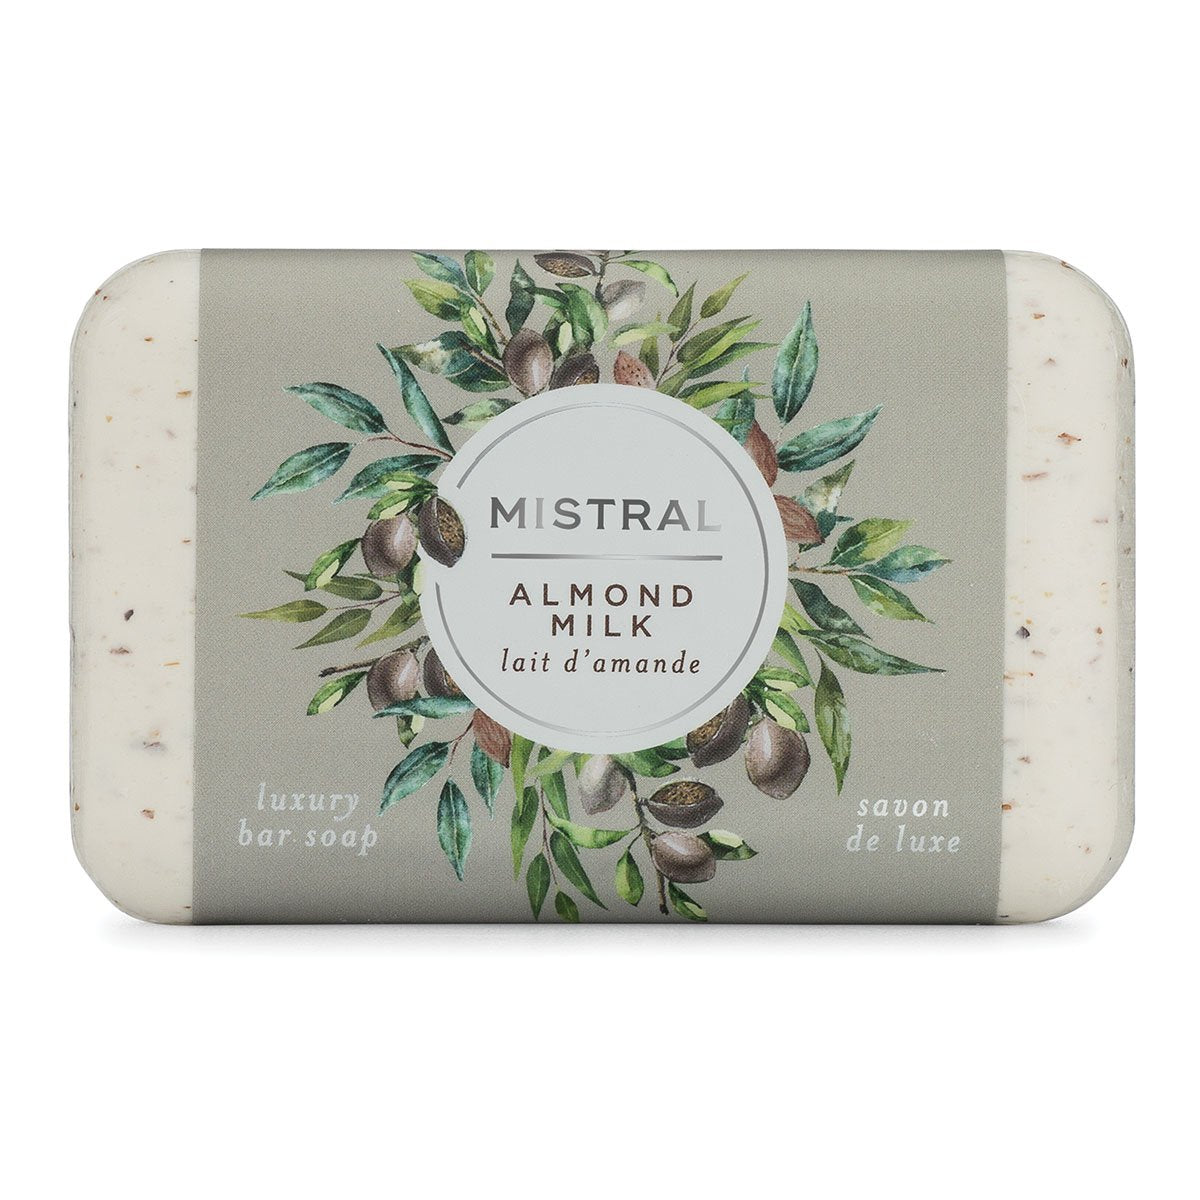 Mistral Almond Milk Soap